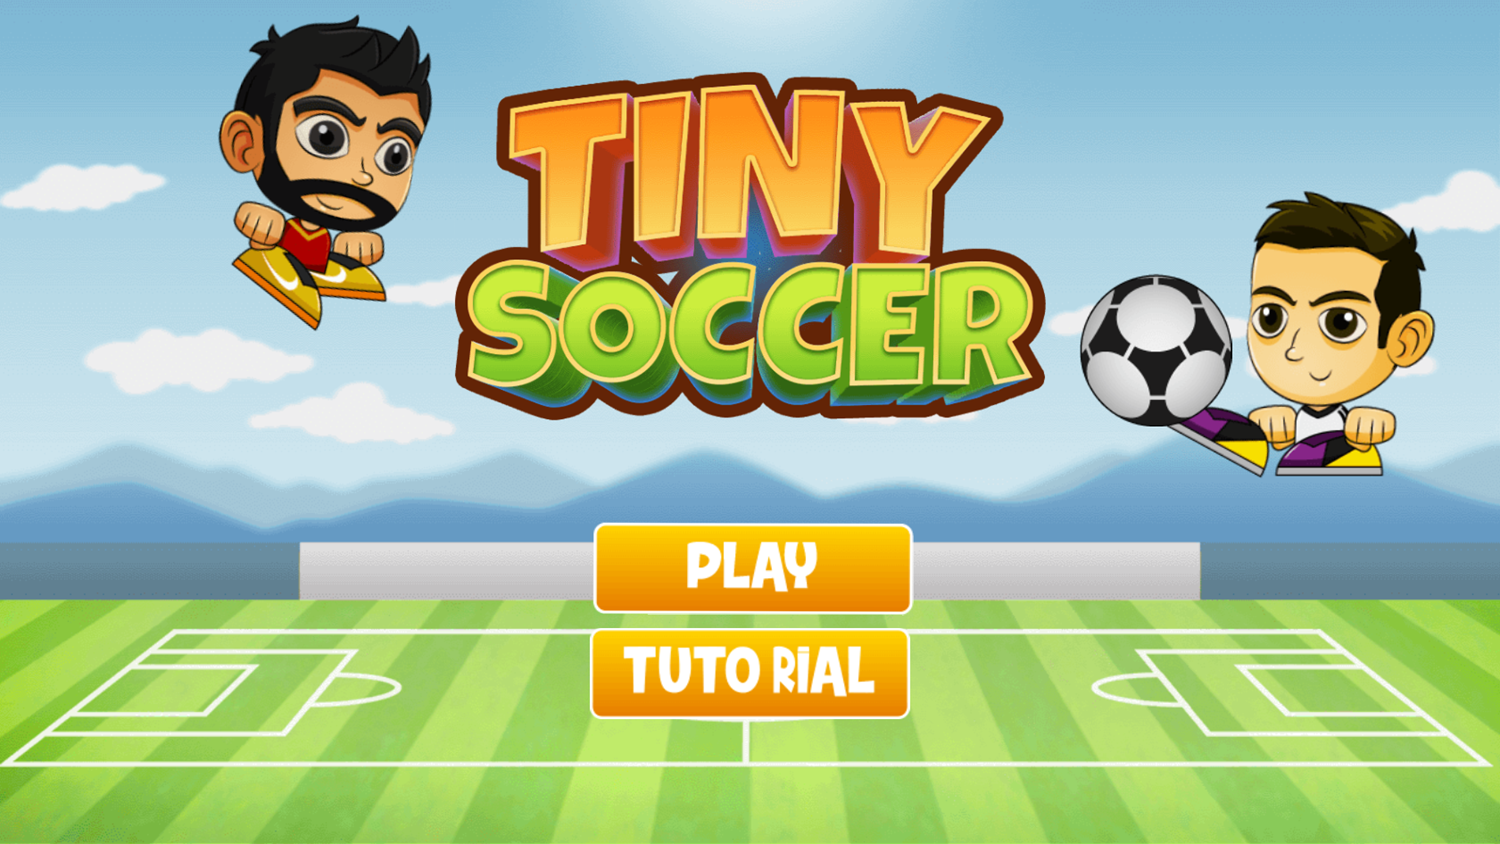 Tiny Soccer Game Welcome Screen Screenshot.